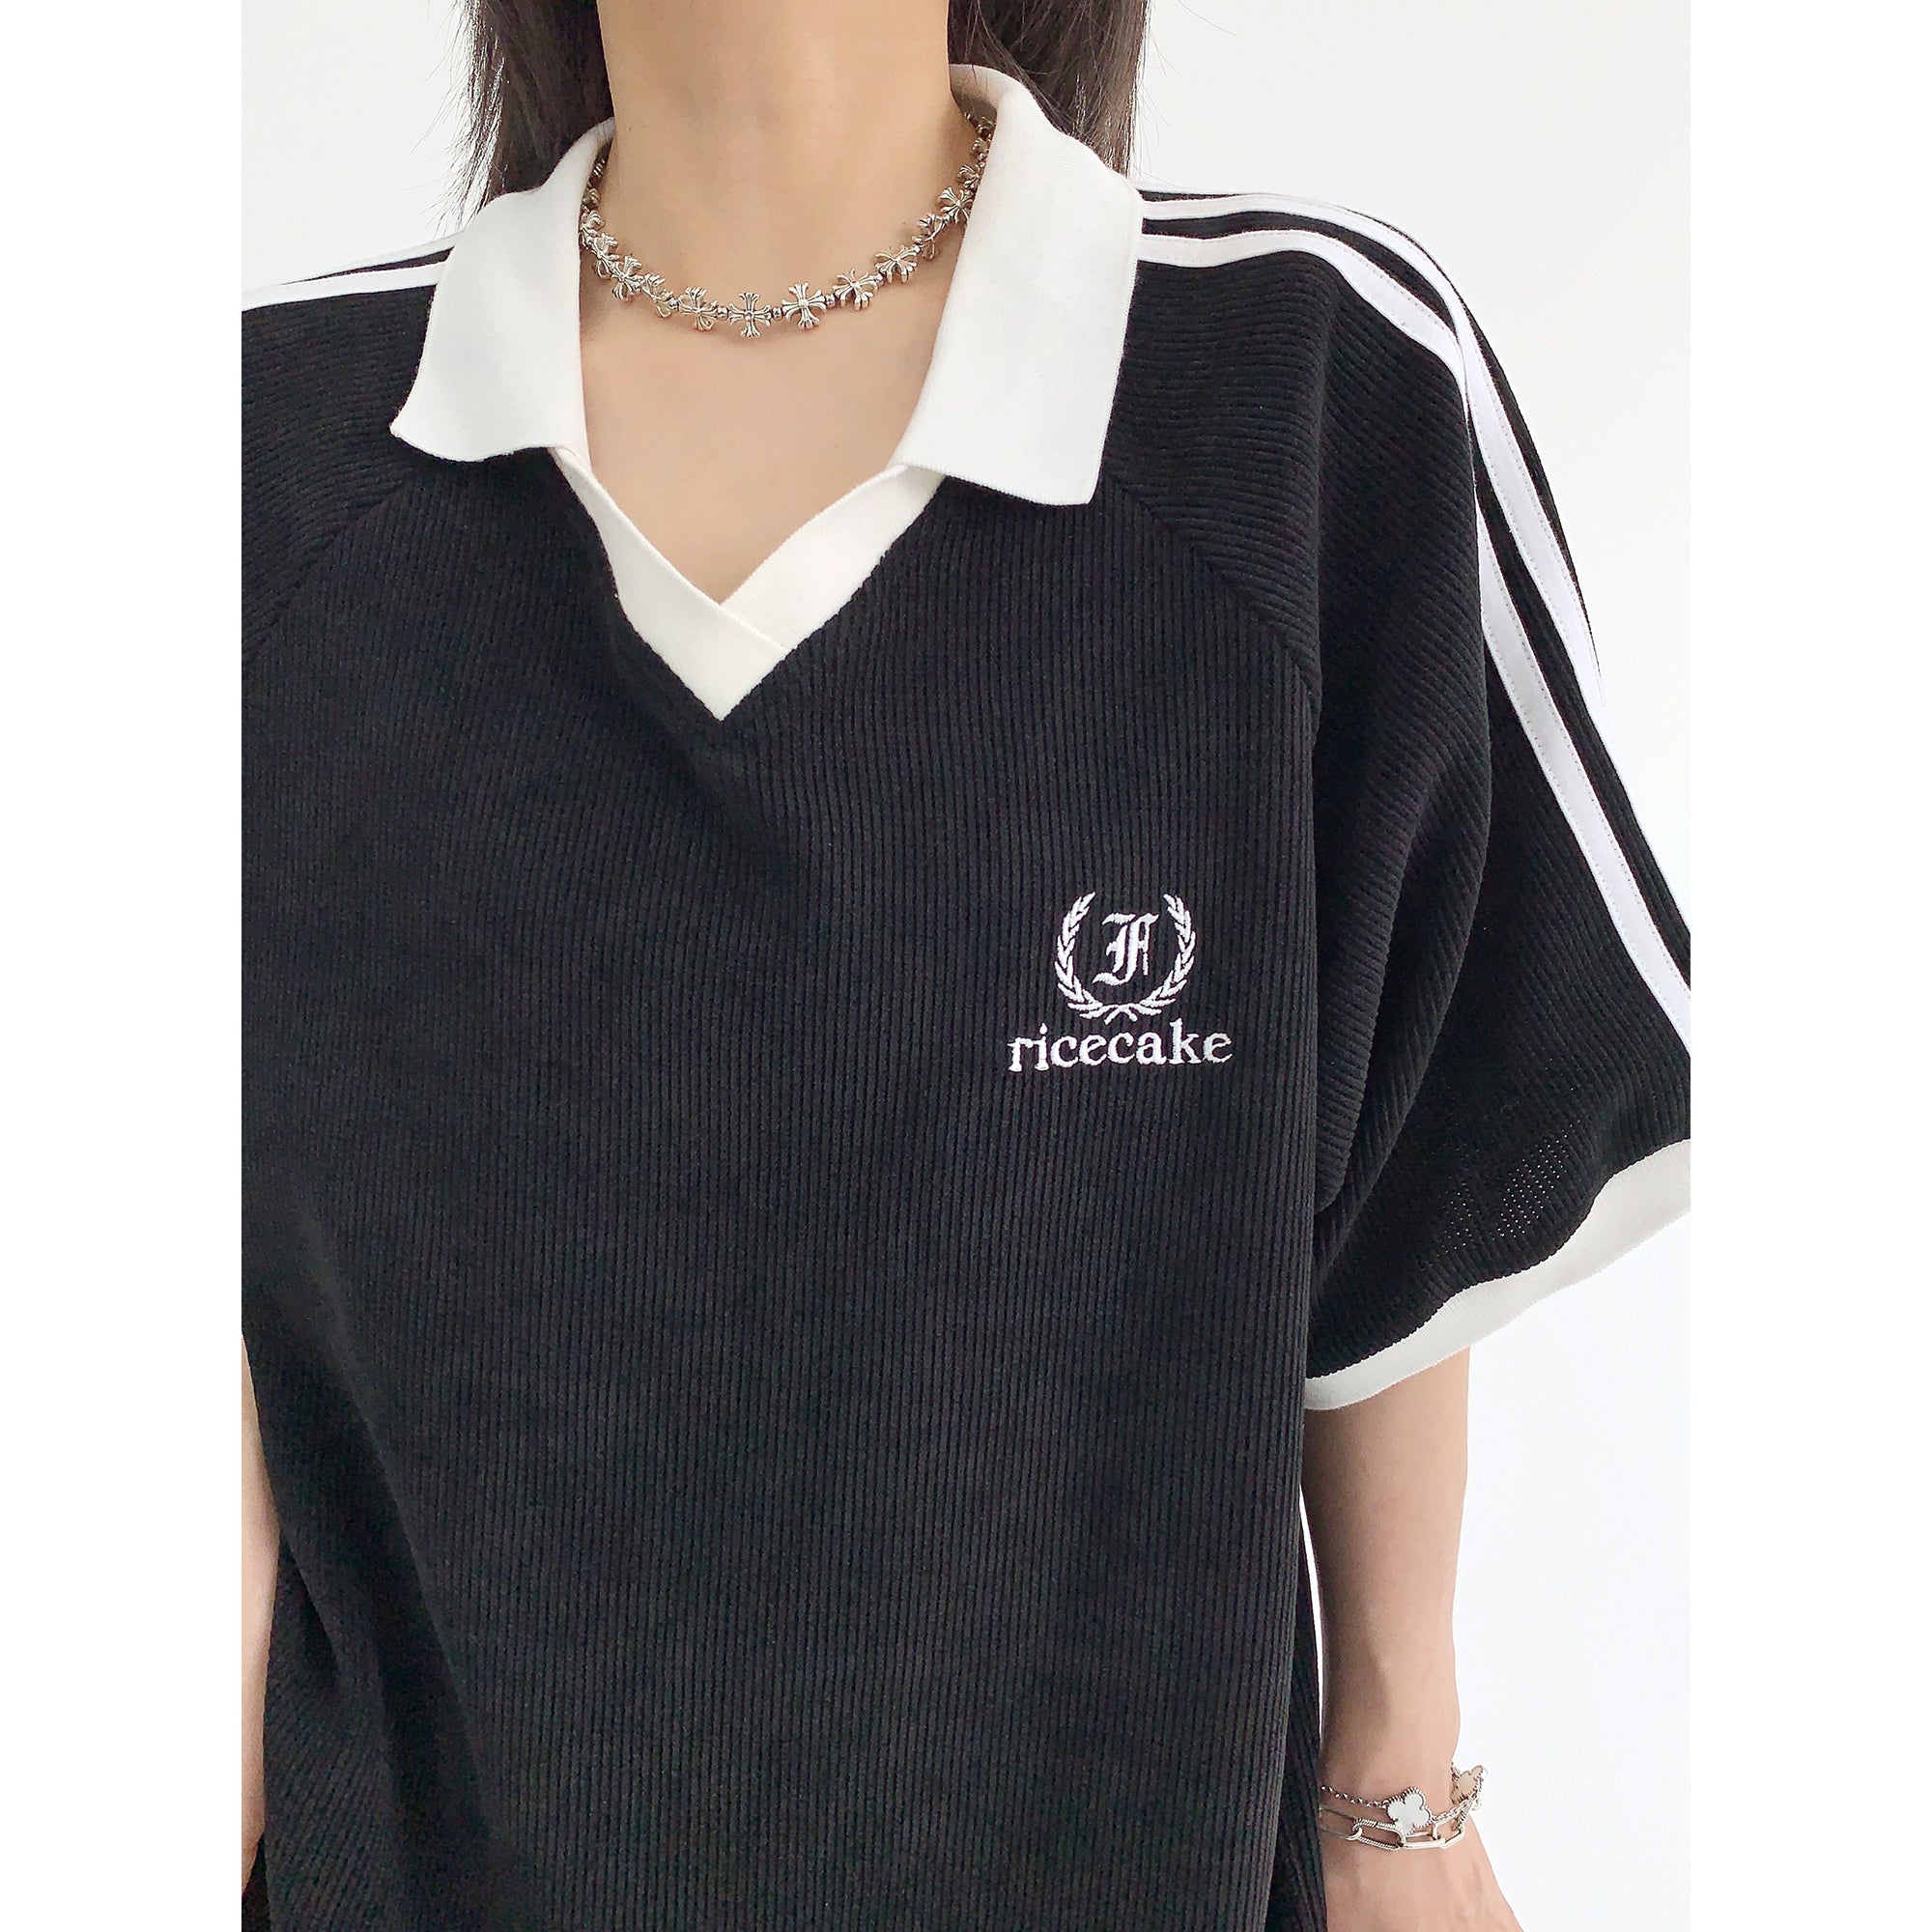 V-neck Three-bar Embroidery Short Sleeve T-shirt MW9046